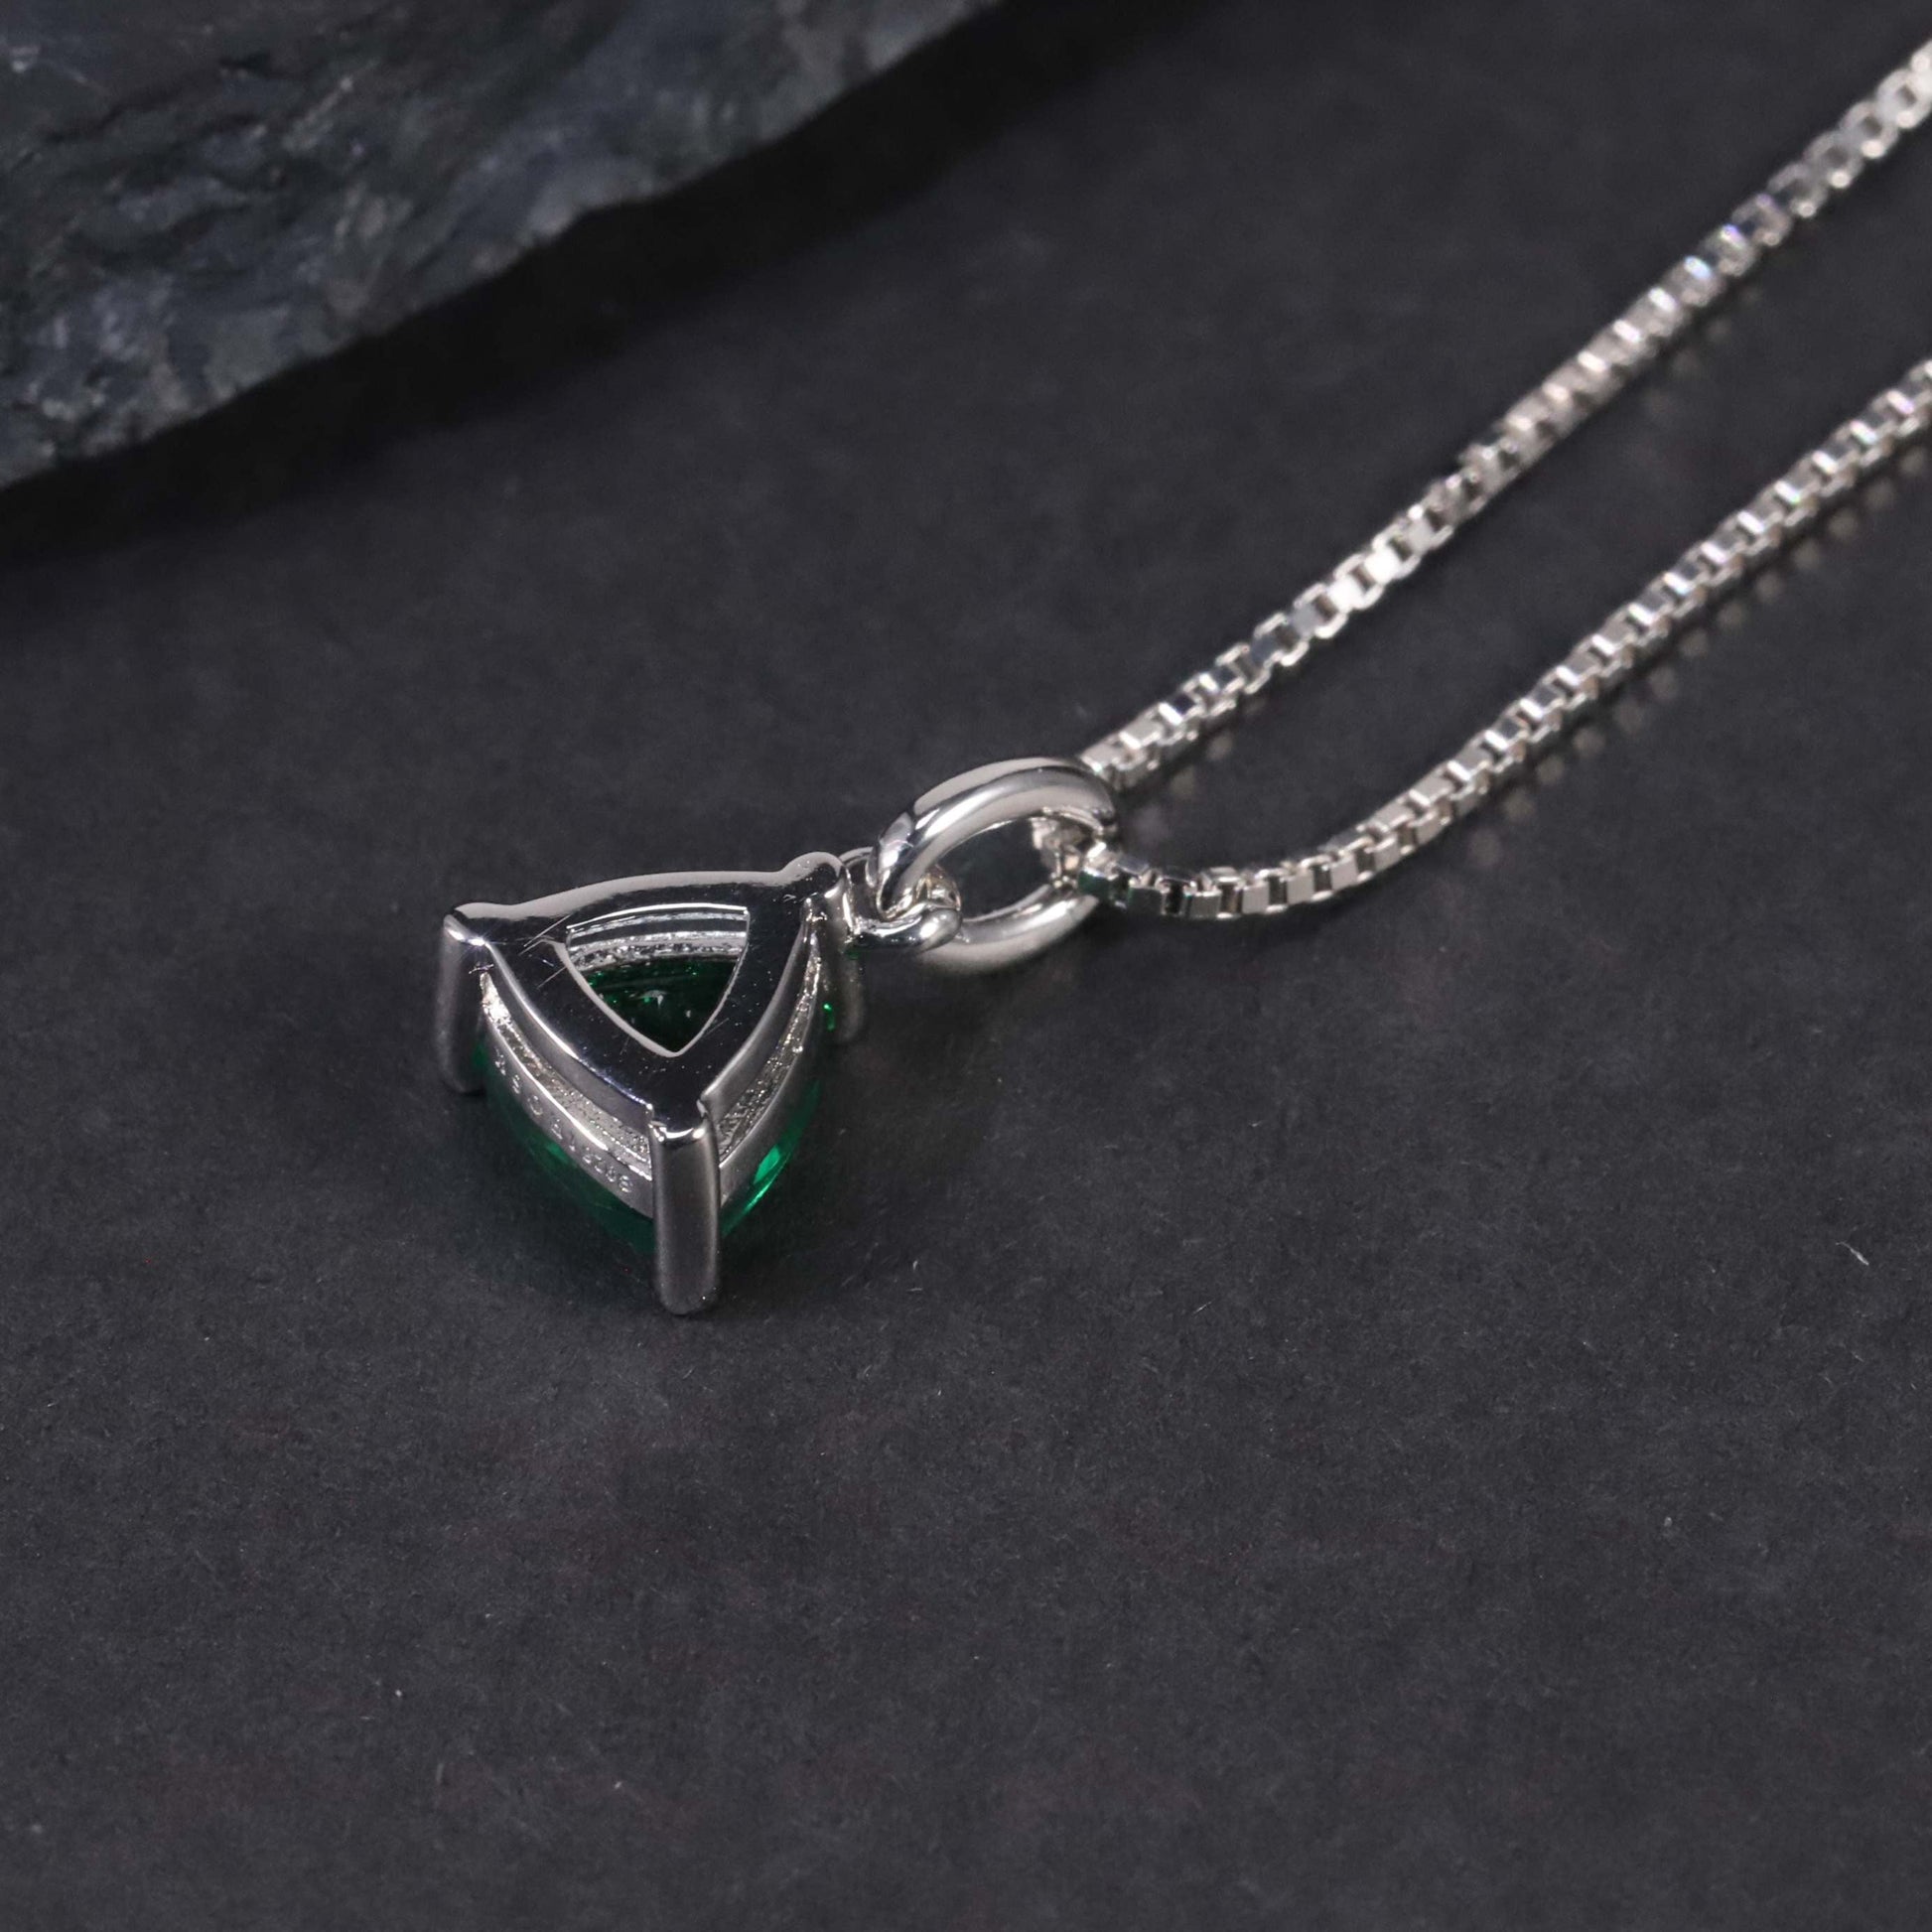 Back side photo of the trillion cut emerald pendant